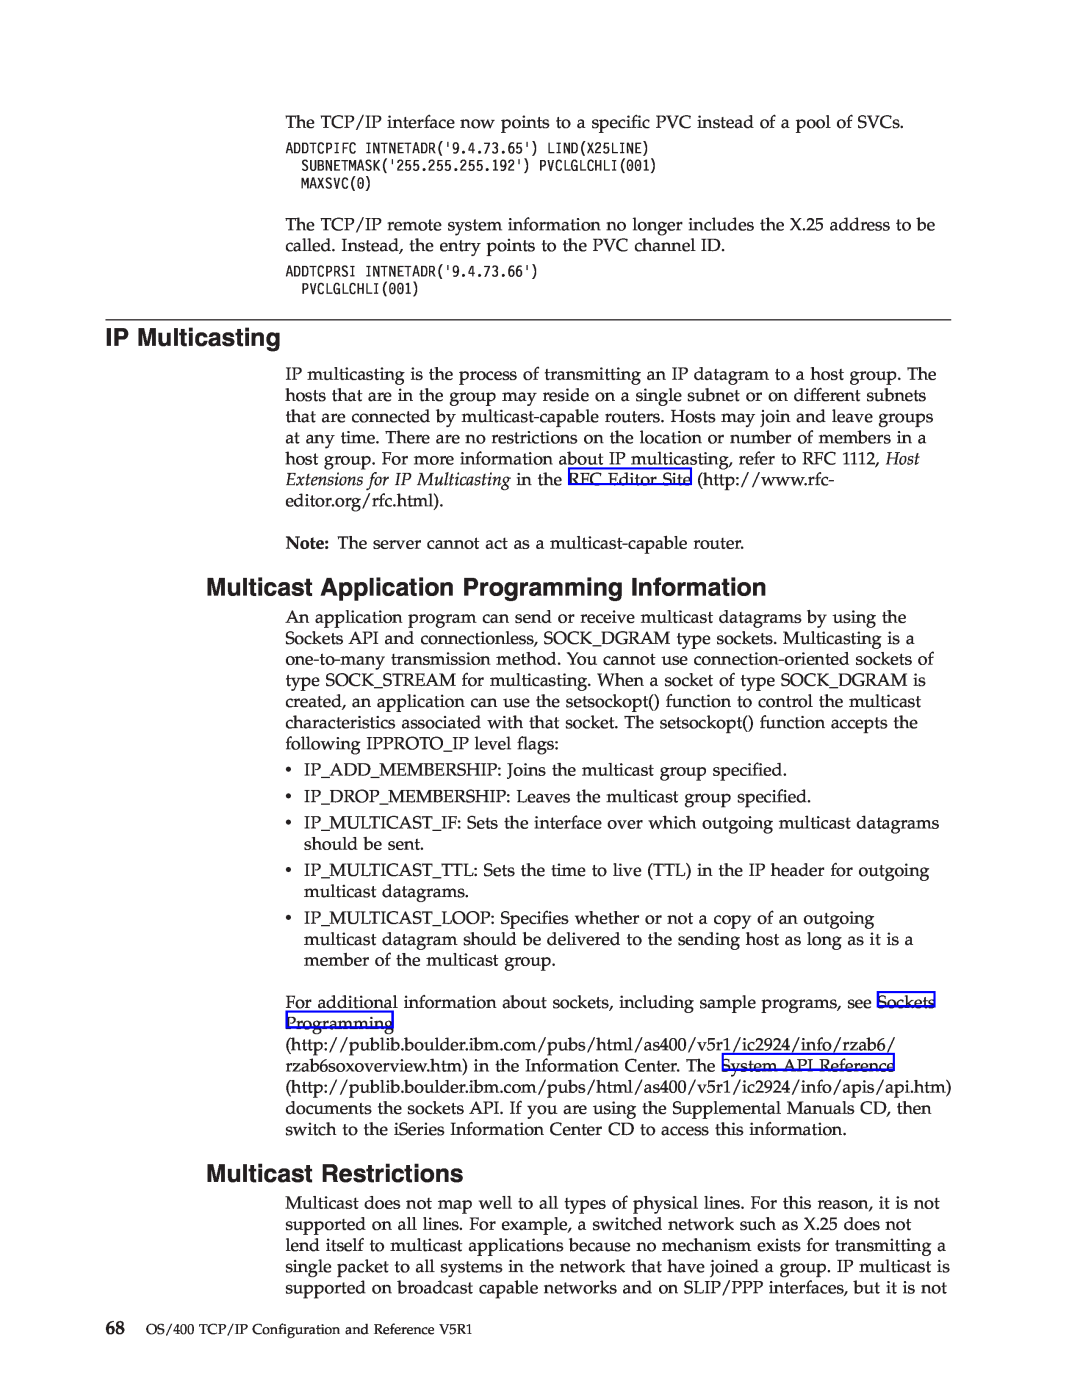 IBM SC41-5420-04 manual IP Multicasting, Multicast Application Programming Information, Multicast Restrictions 